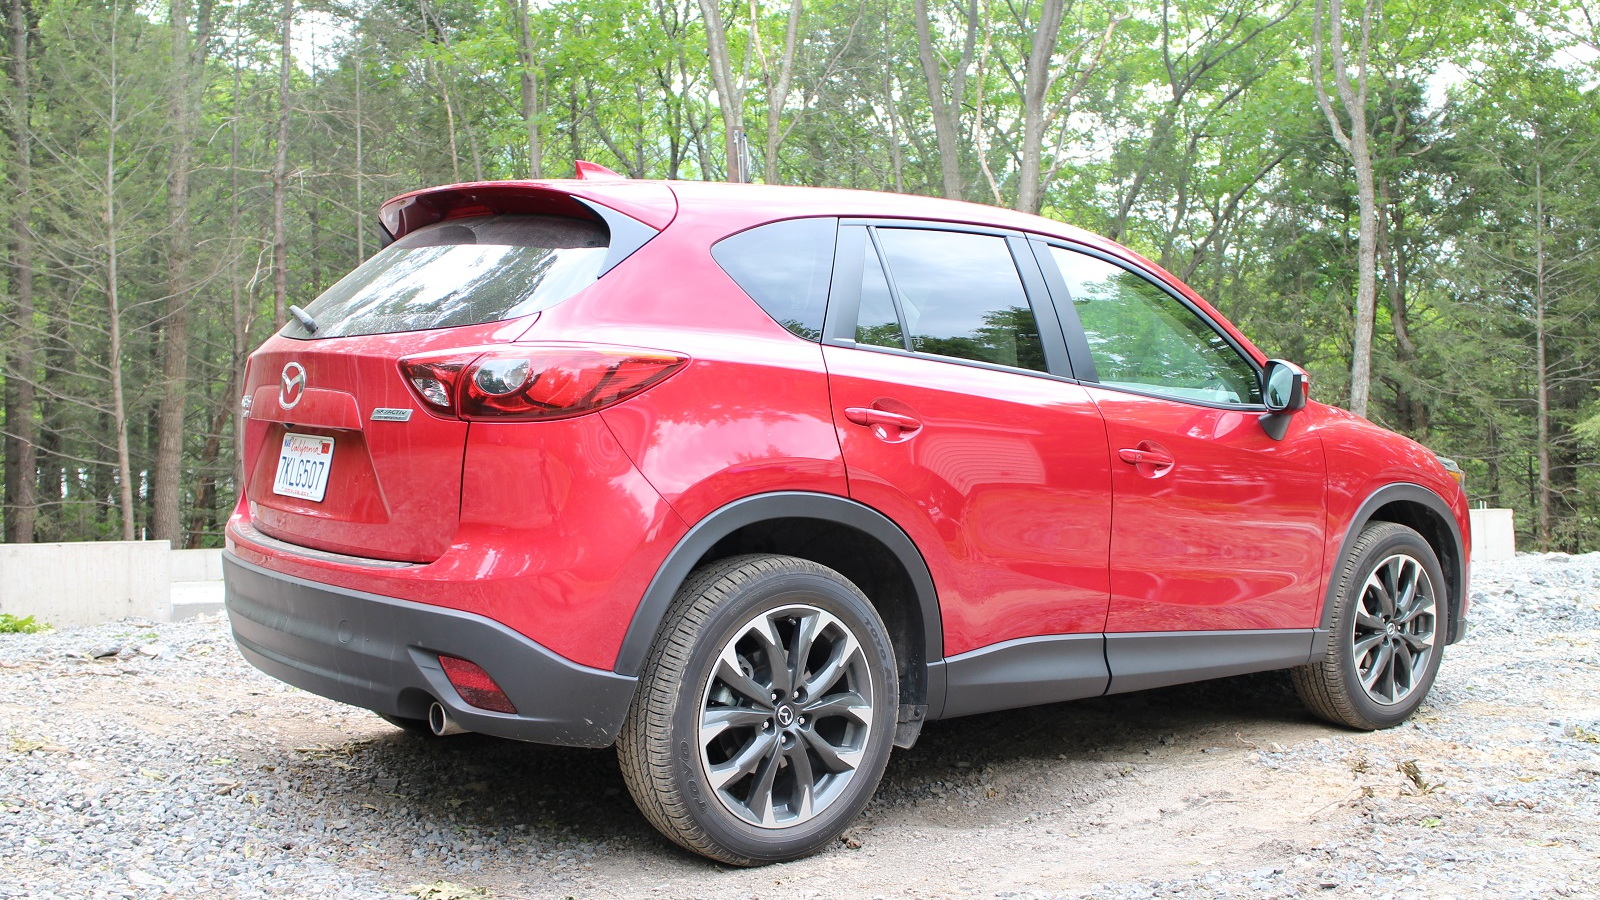 2016 Mazda CX-5 Grand Touring AWD, Catskill Mountains, New York, May 2015